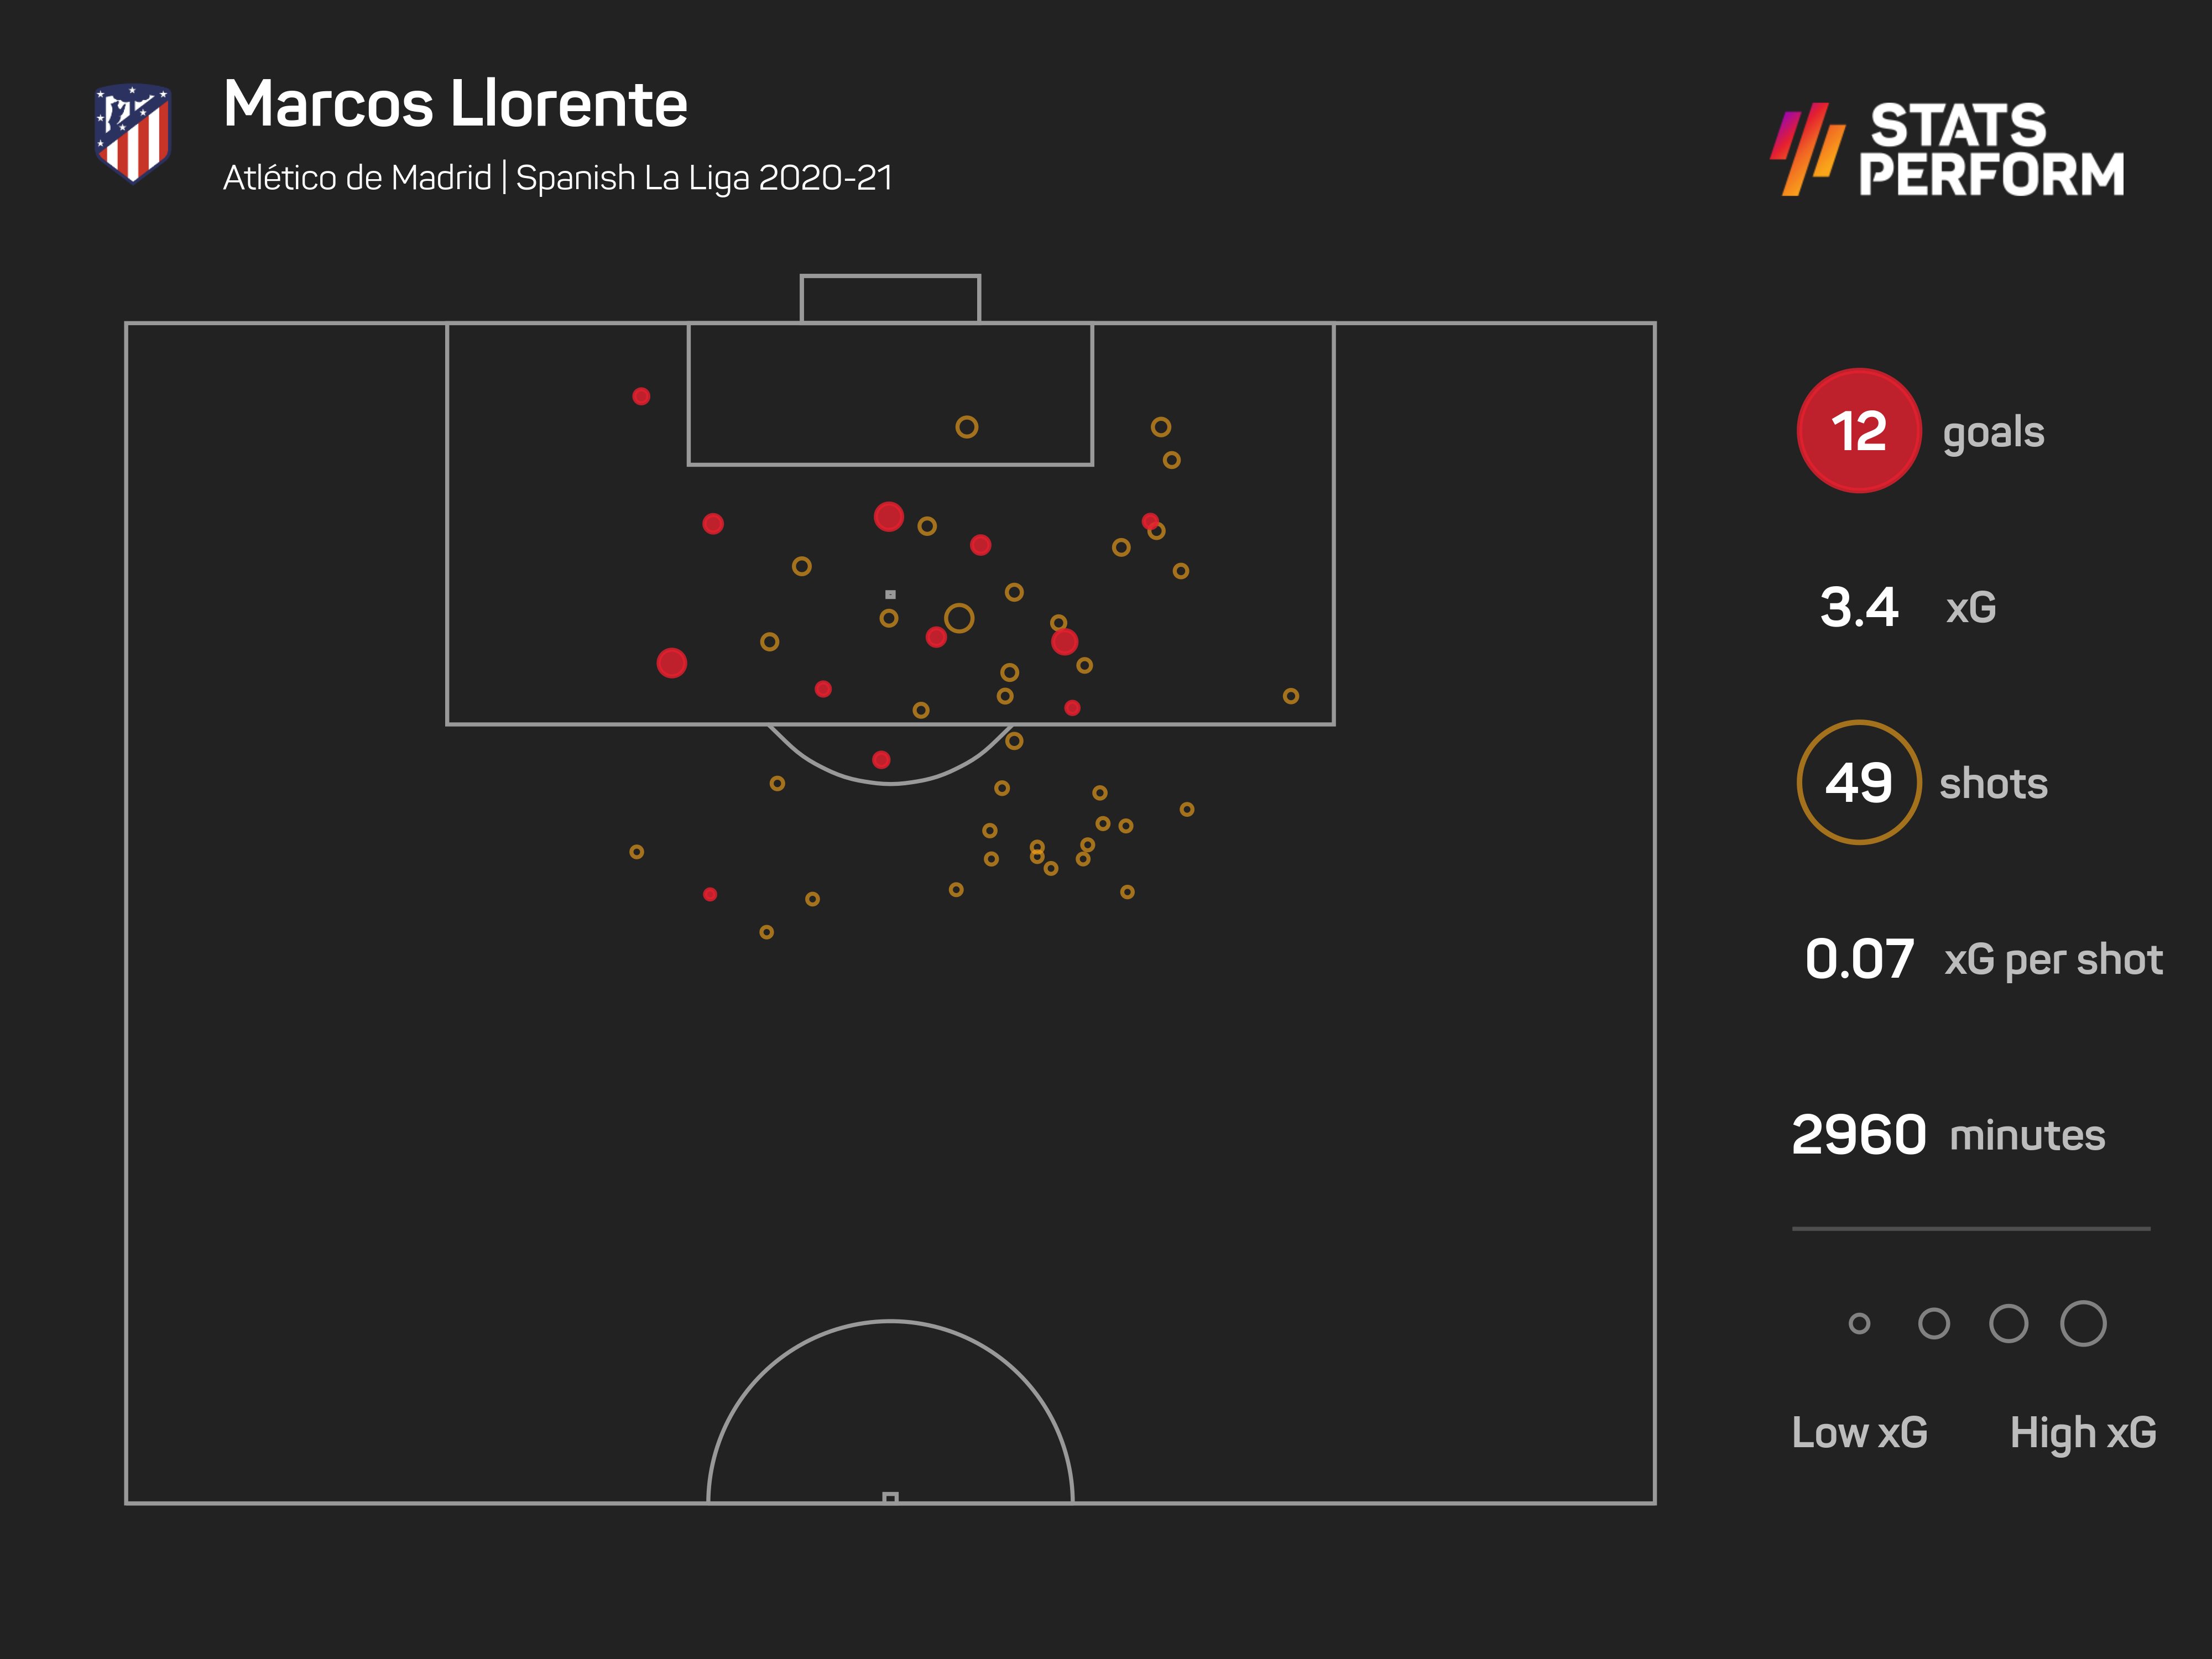 Marcos Llorente was a huge threat last season